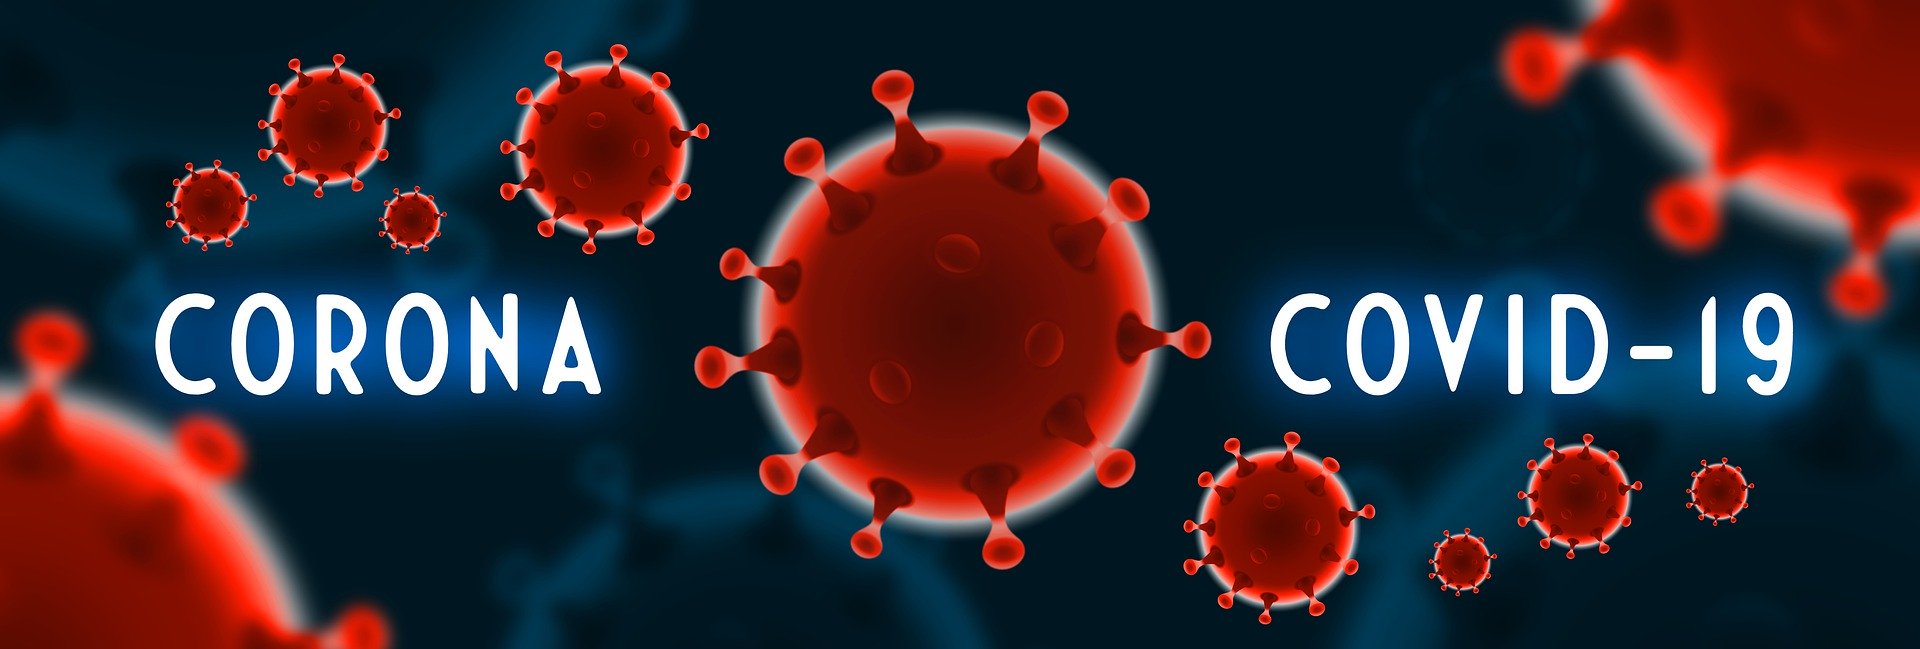 Covid-19 Coronavirus Header Image